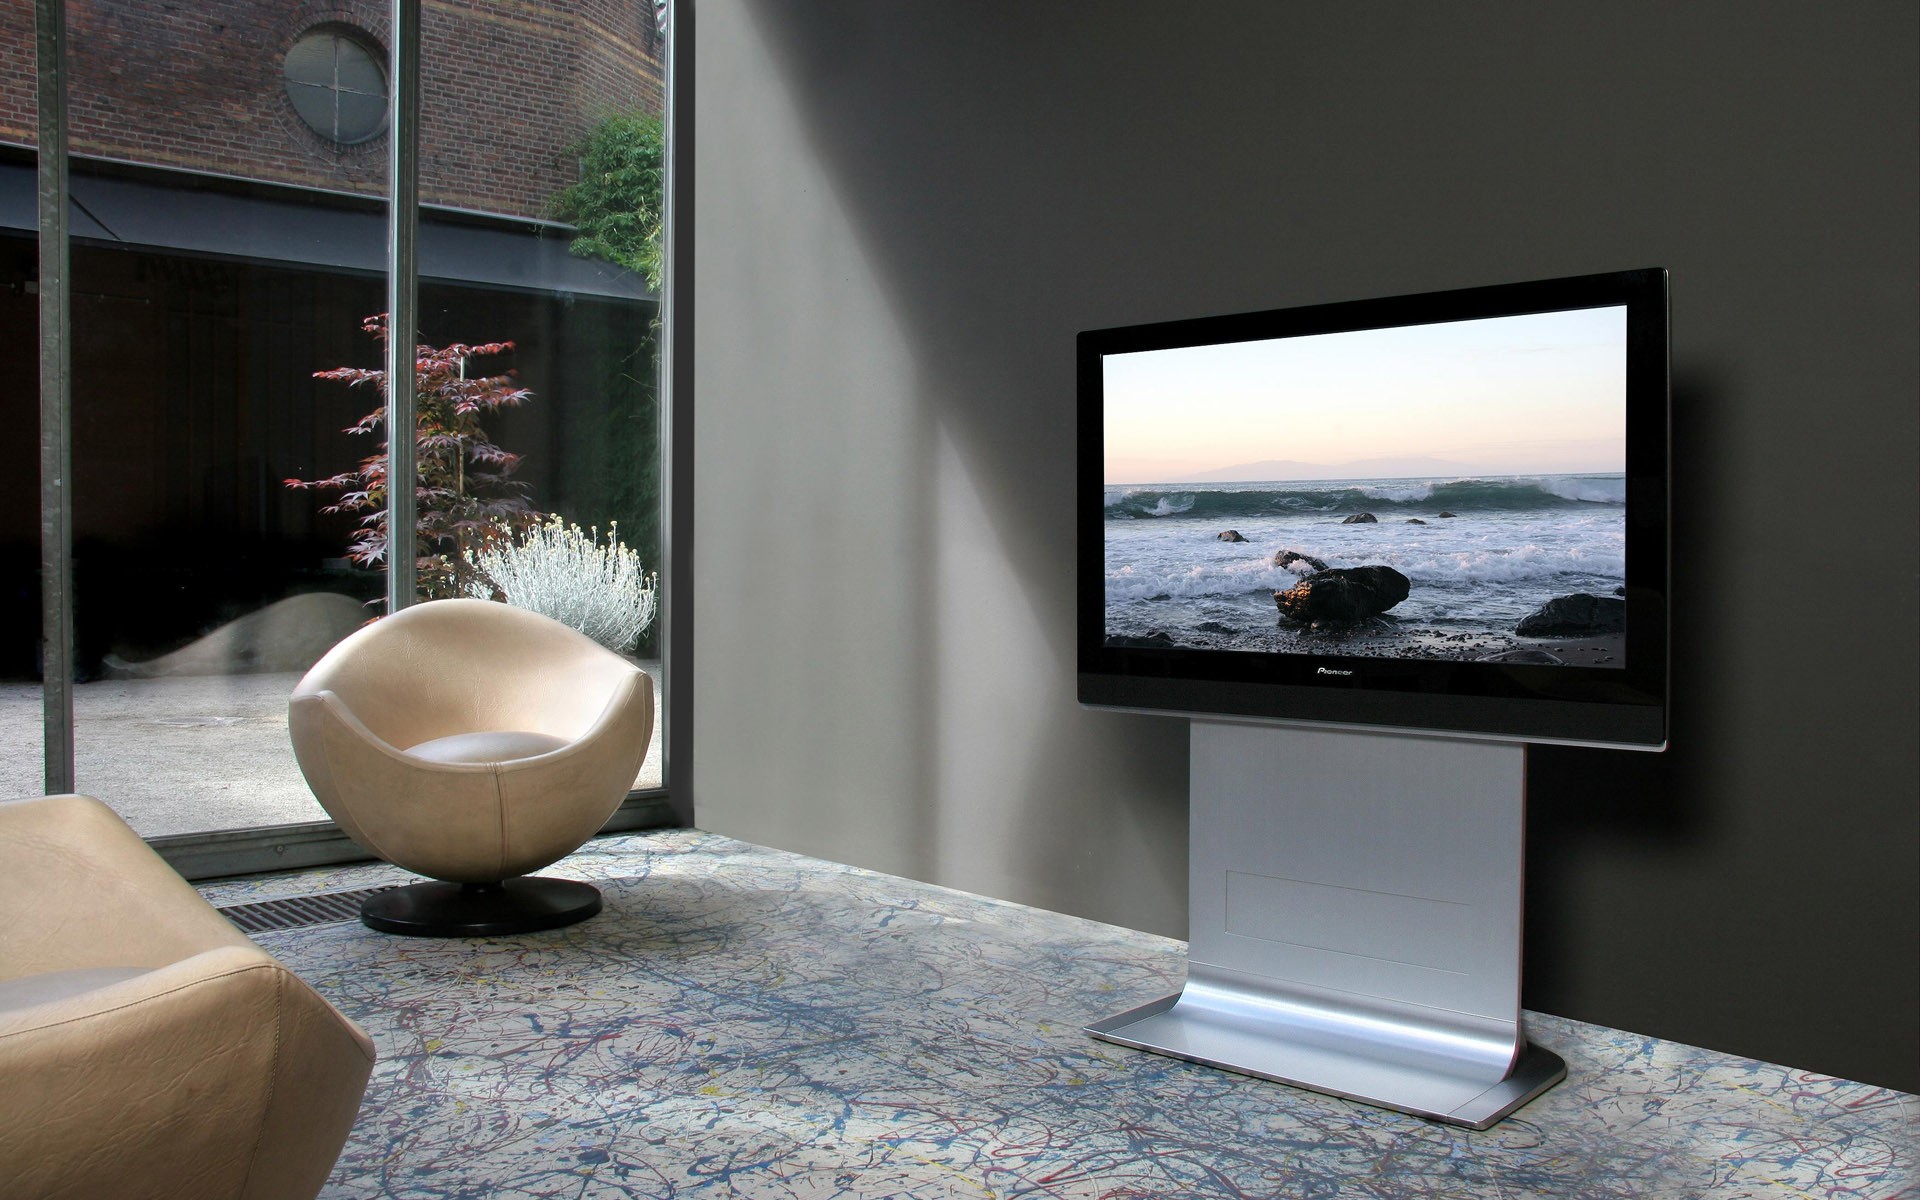 TV, couch, trees, room, interior - desktop wallpaper